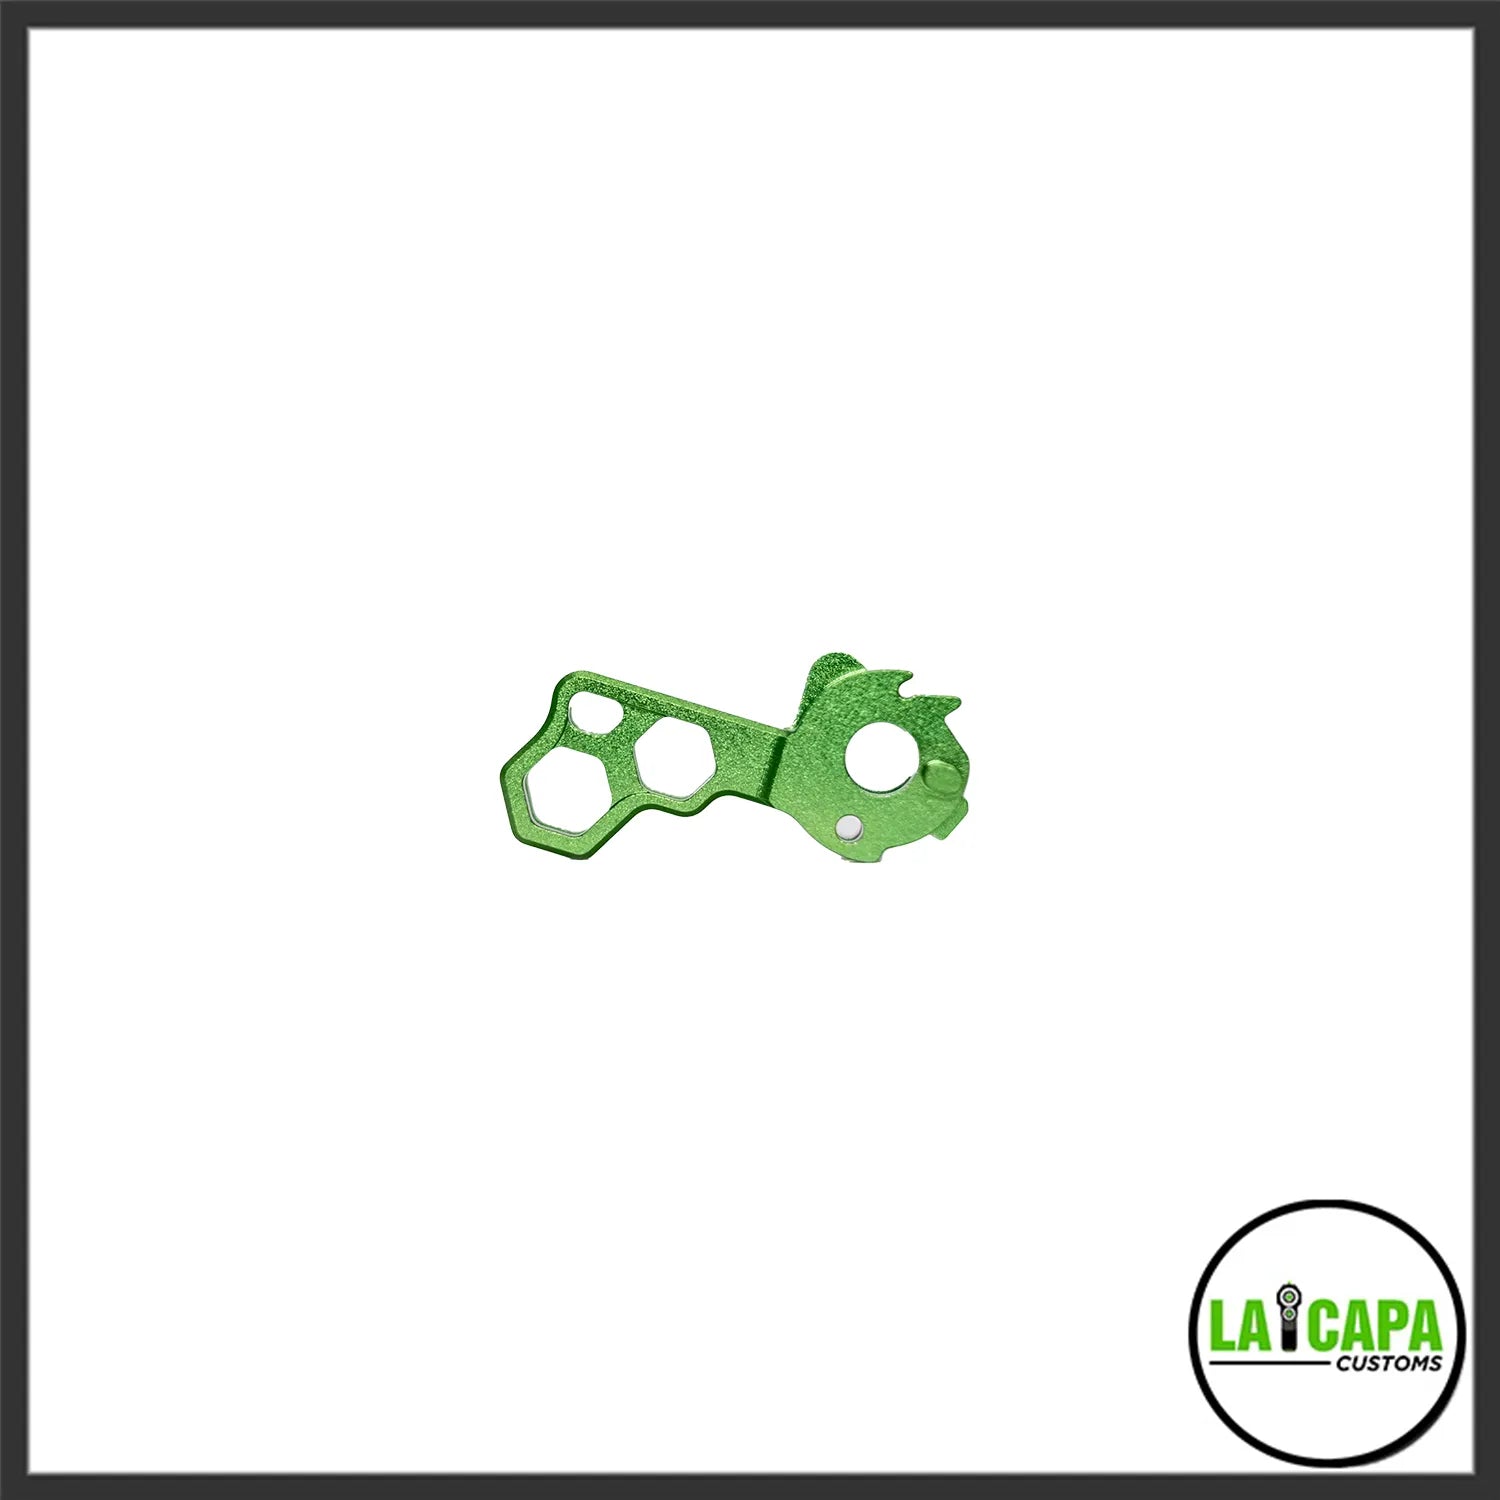 LA Capa Customs “HIVE” Duralumin Hammer for Hi Capa - Green